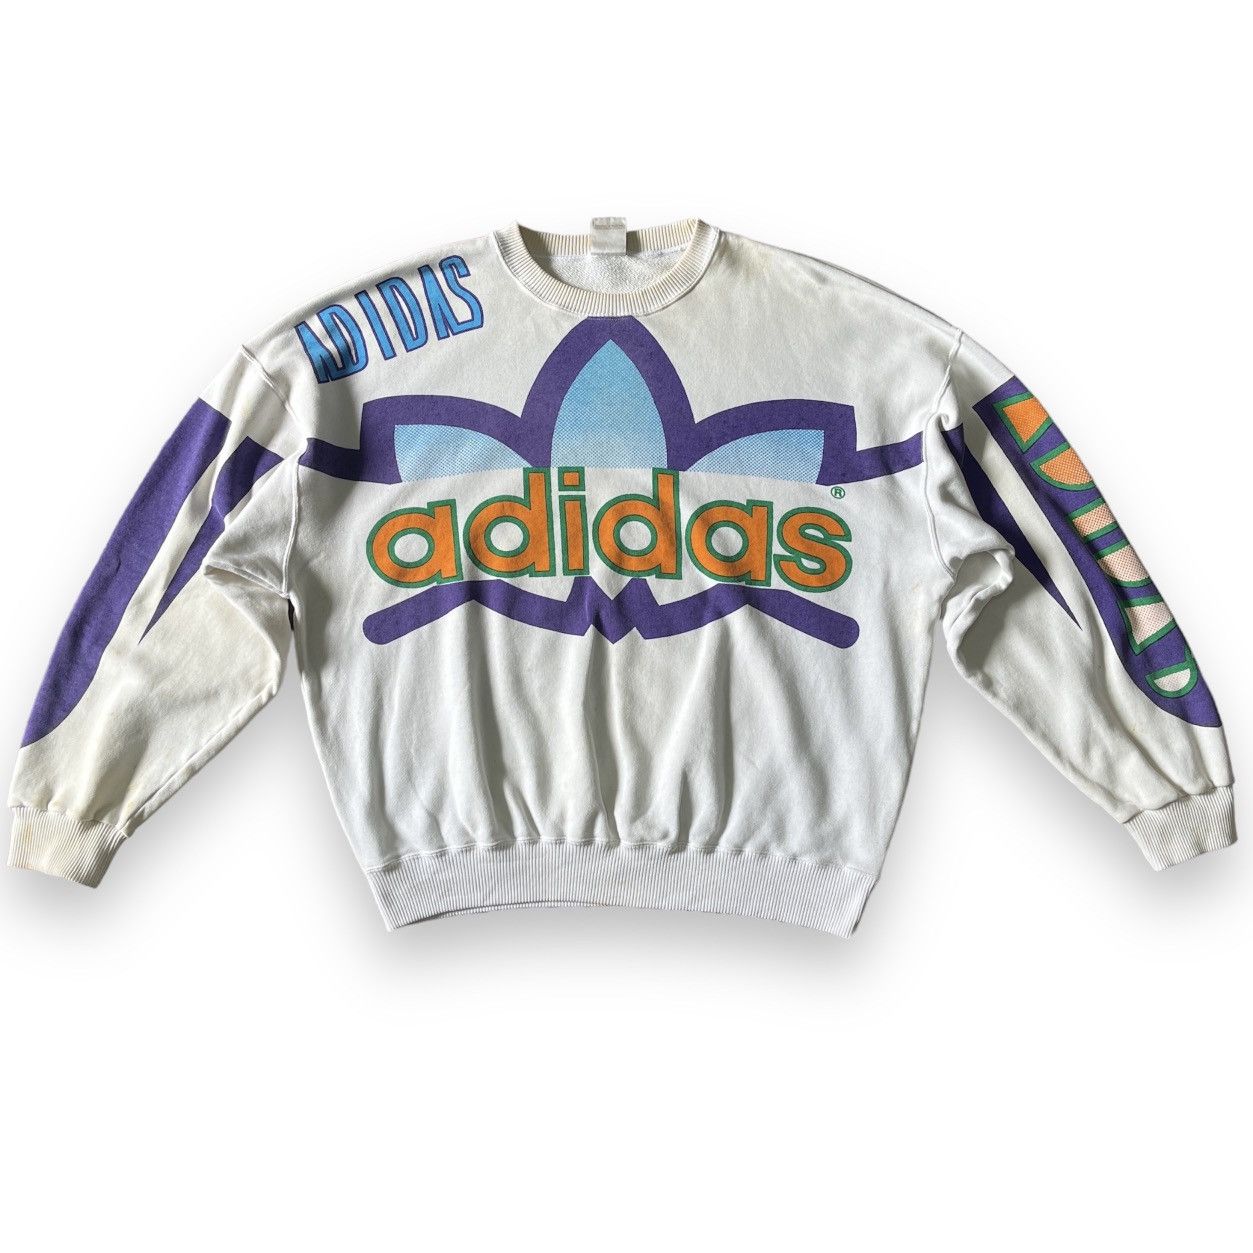 Grails 90s Adidas Big Logo Overprinted - 20